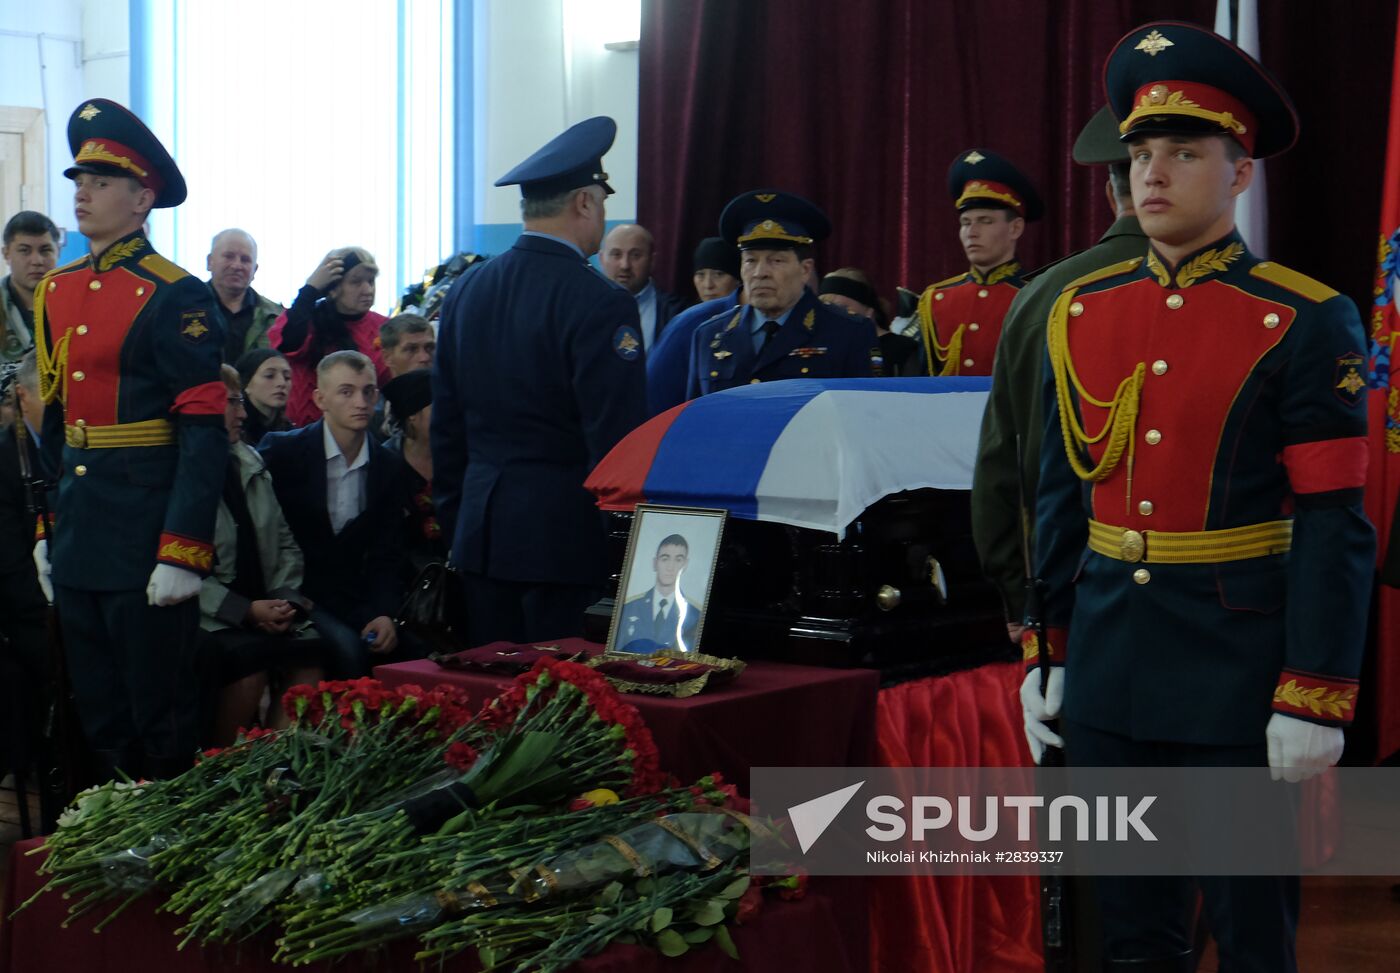 Funeral of Hero of Russia Alexander Prokhorenko killed in Syria